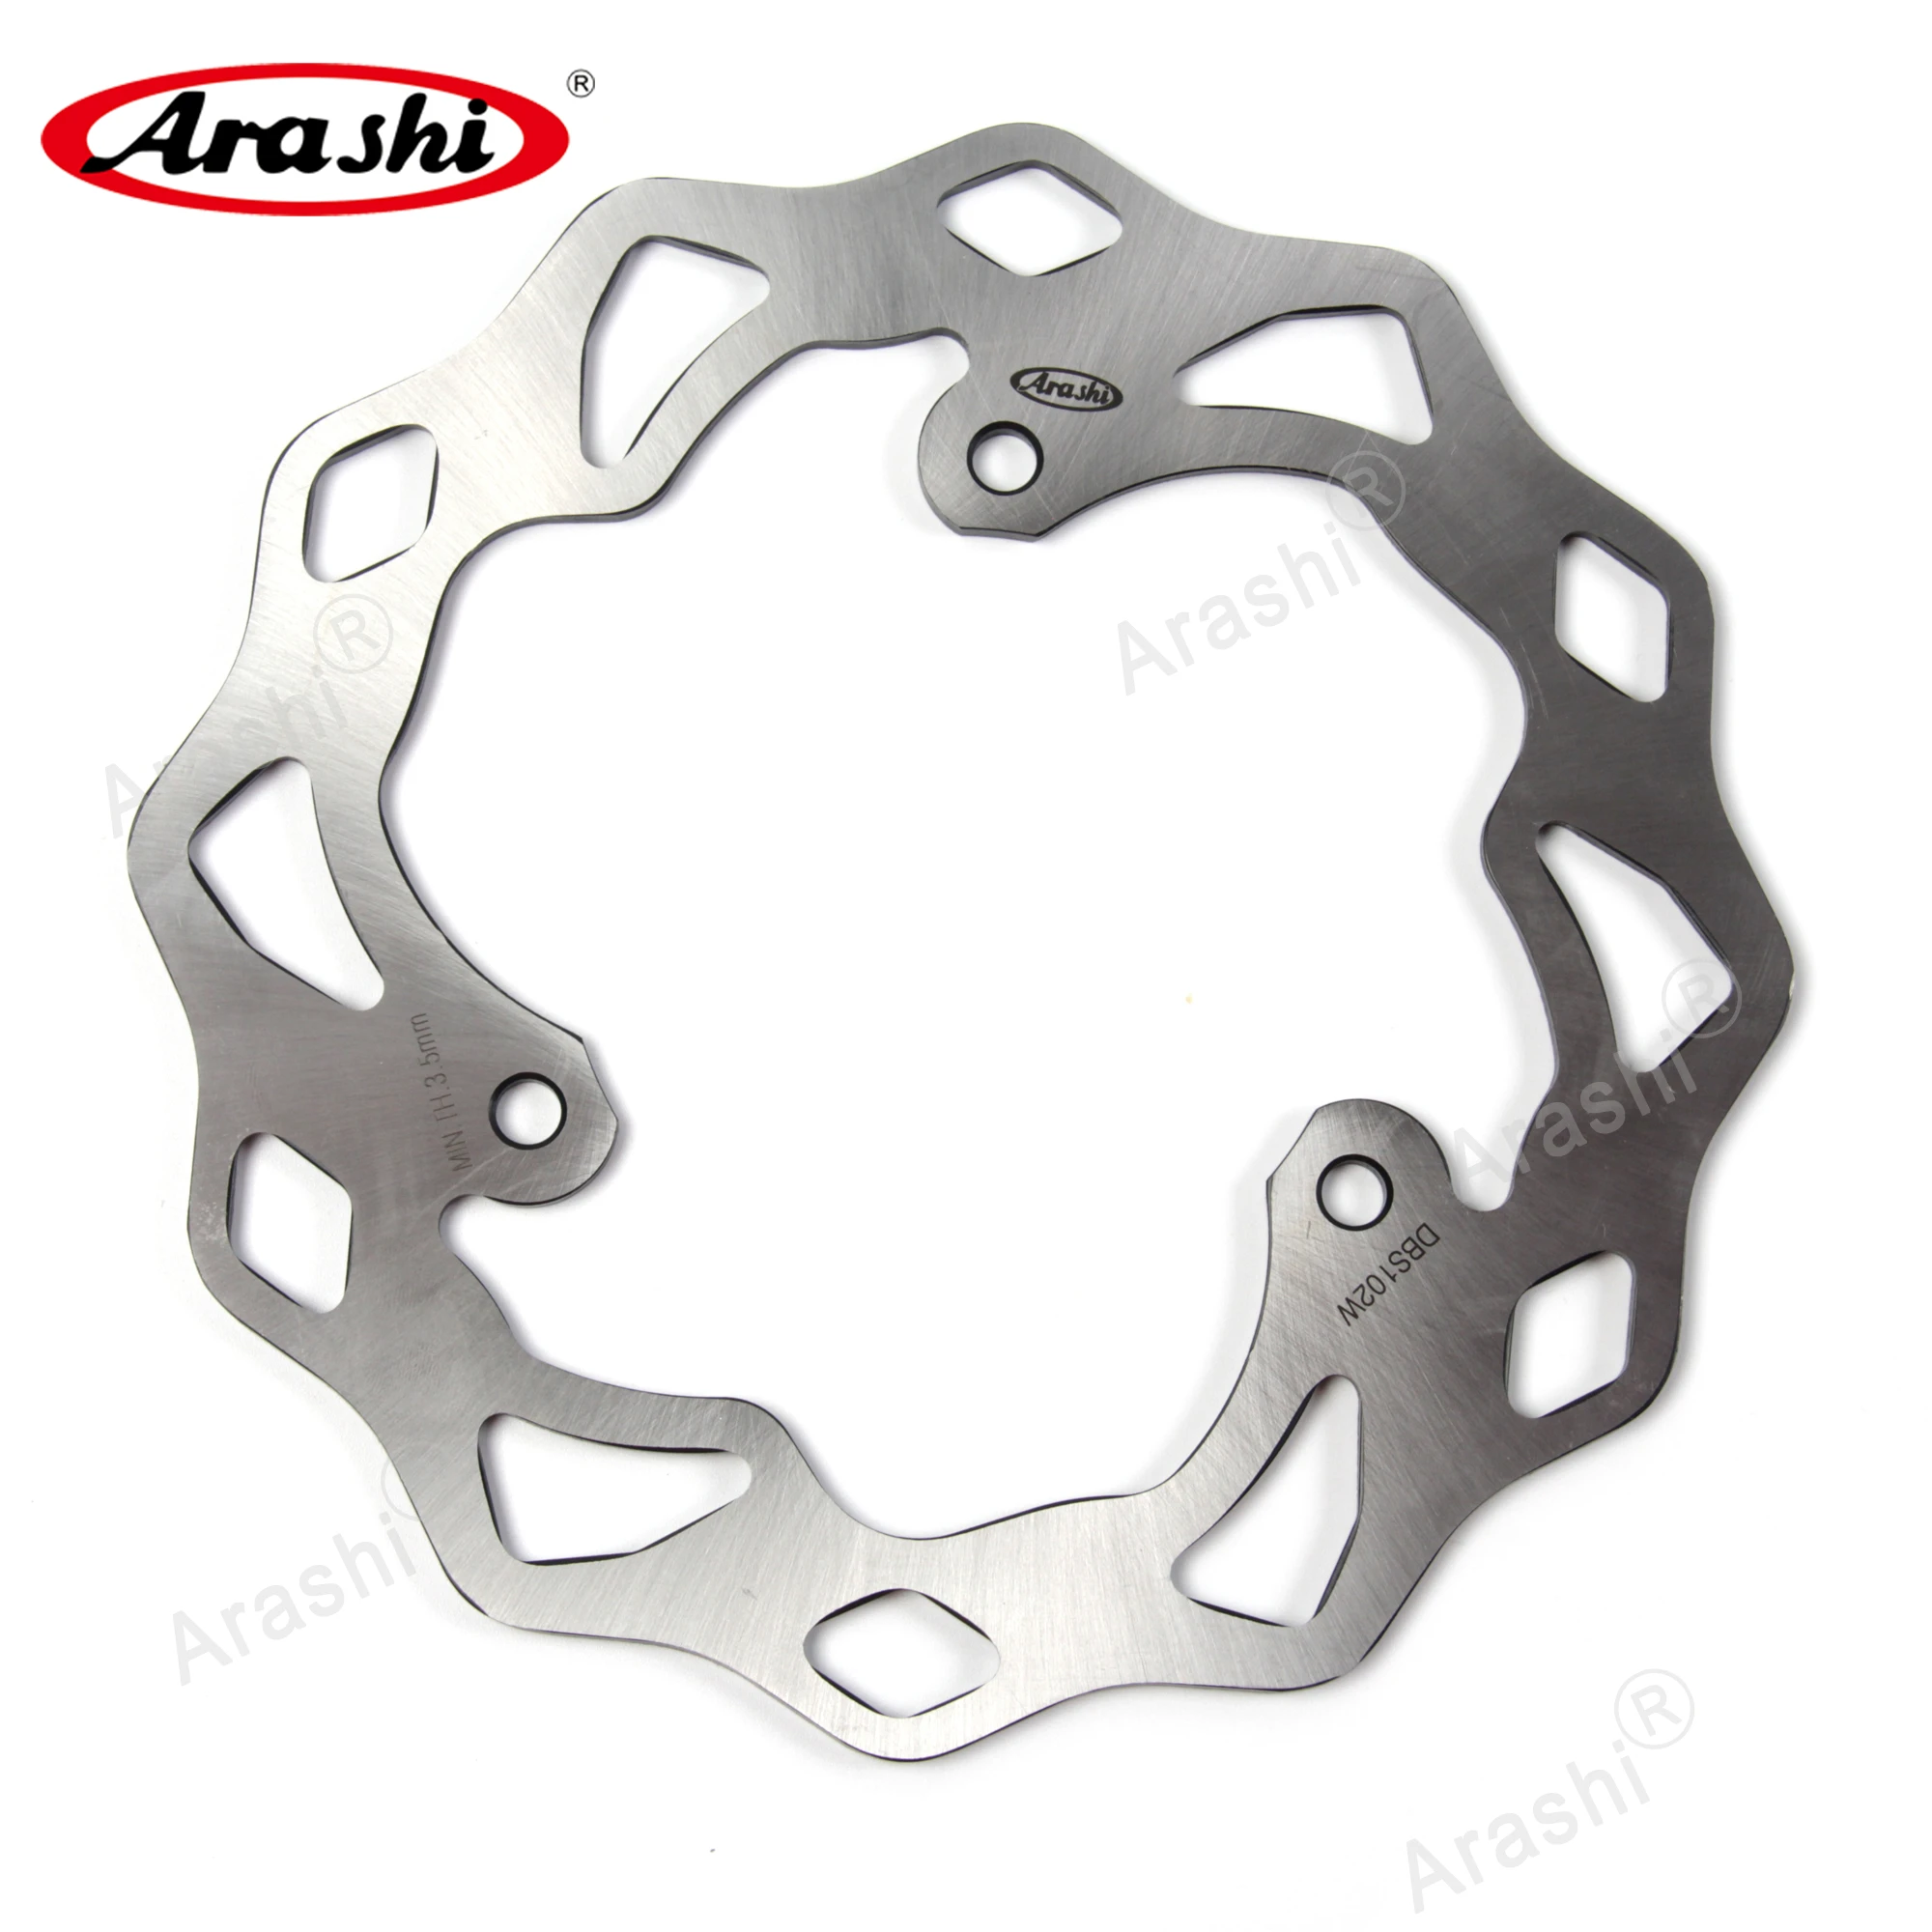 

Arashi 1PCS Motorcycle CNC Rear Brake Disk Disc Rotors Accessories For YAMAHA YZF-R3 YZFR3 ABS/ MT-03 FZ-03 MT03 FZ03 YZF R3 New